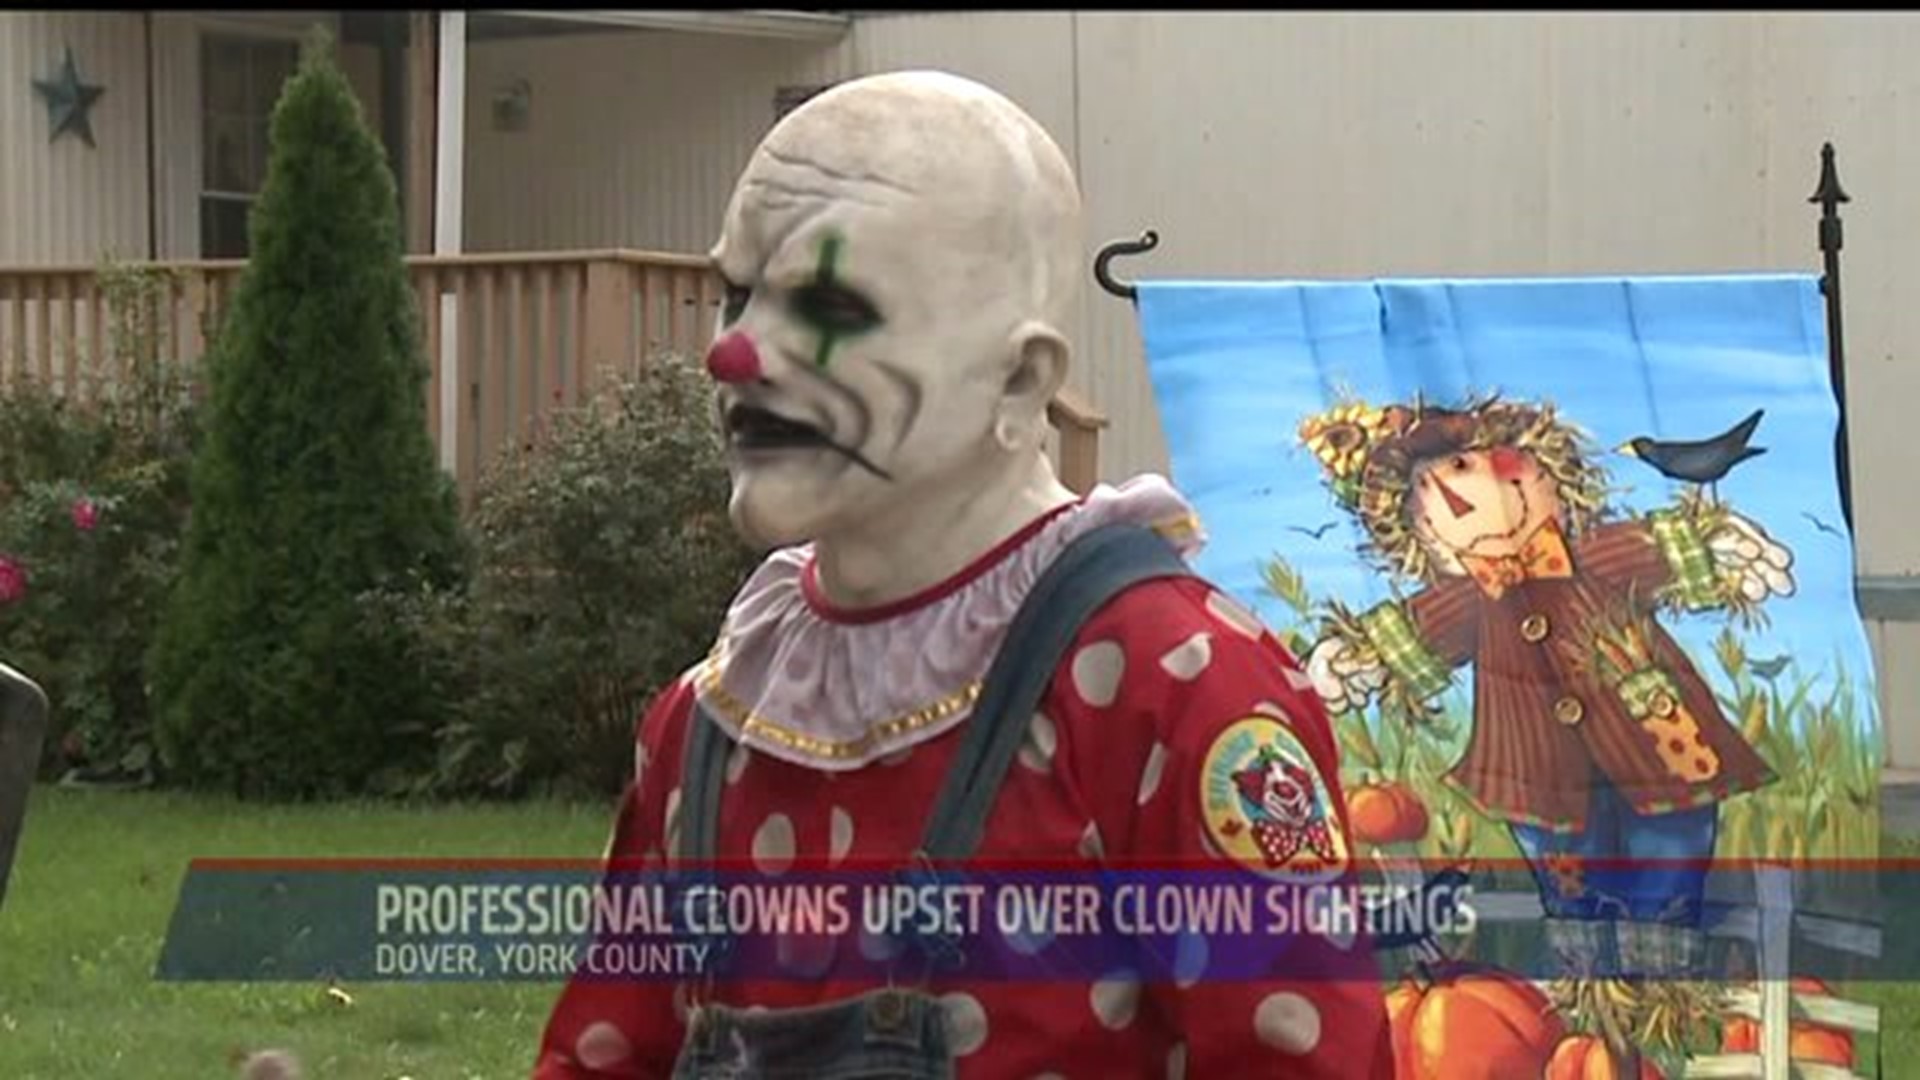 Professional clowns upset over recent clown sightings